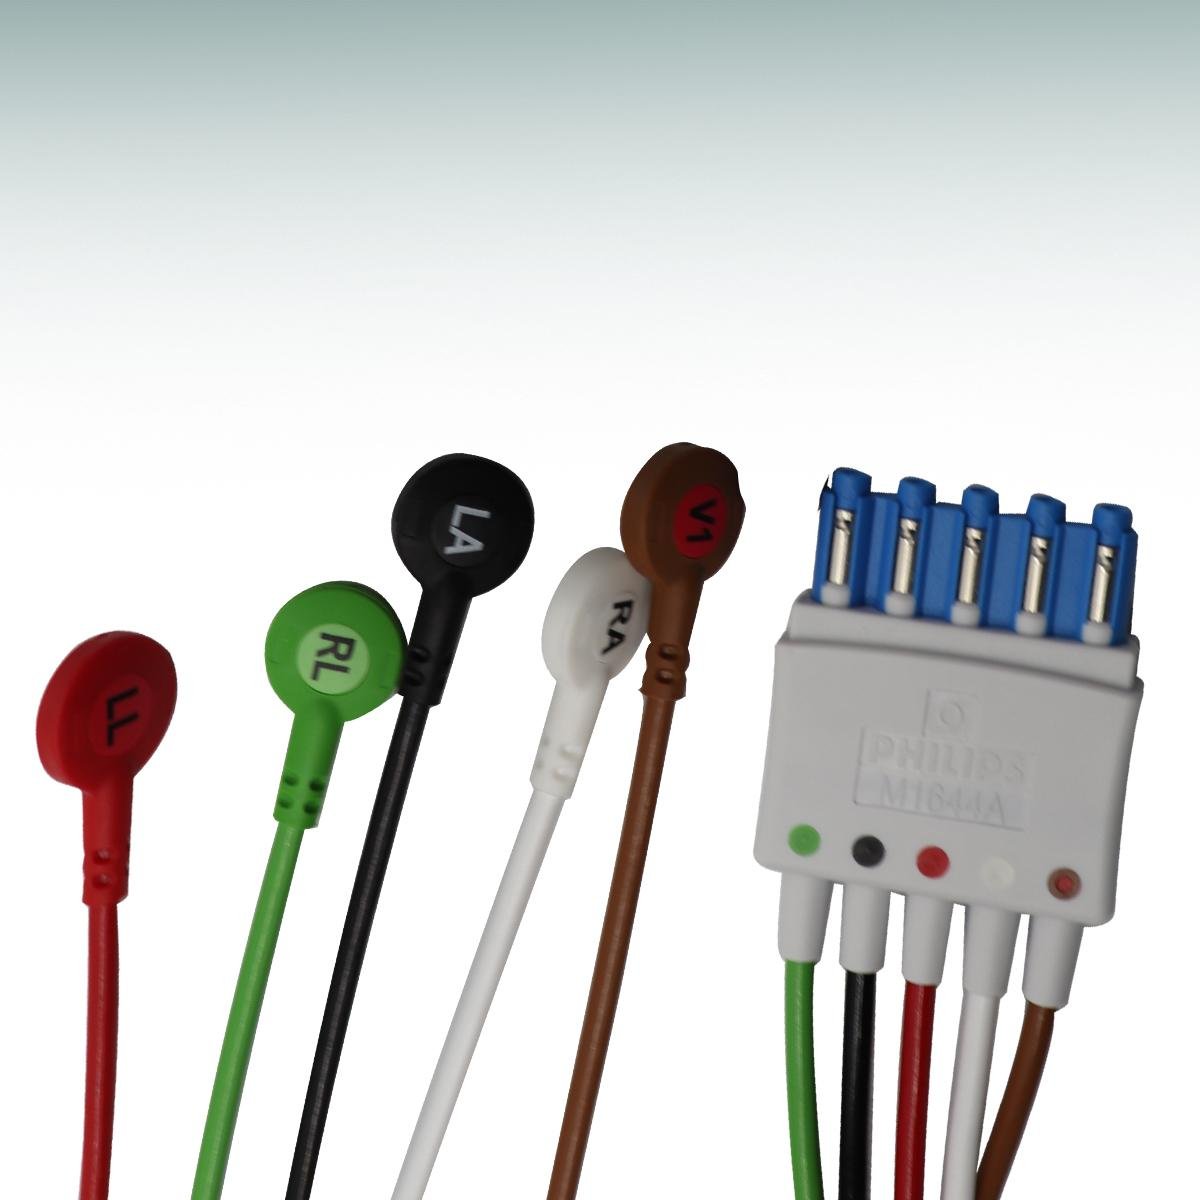 Original Philips ECG cable leadwire 5-pin lead wire M1644A for monitor cable  3